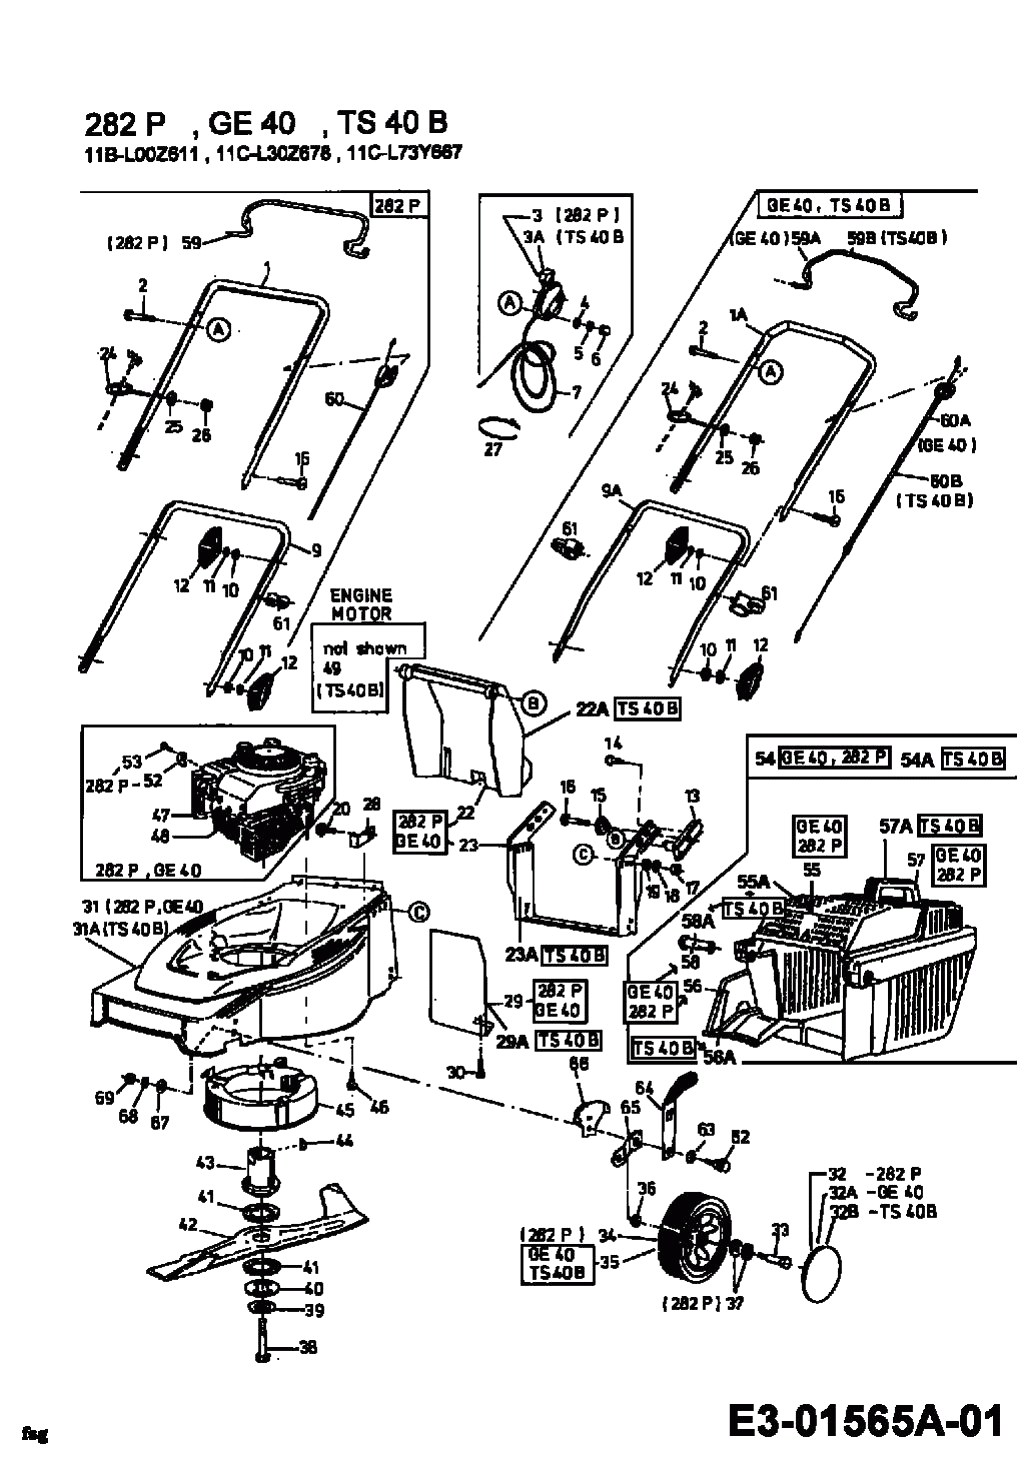 MTD Артикул 11C-L30Z678 (год выпуска 2001). Основная деталировка